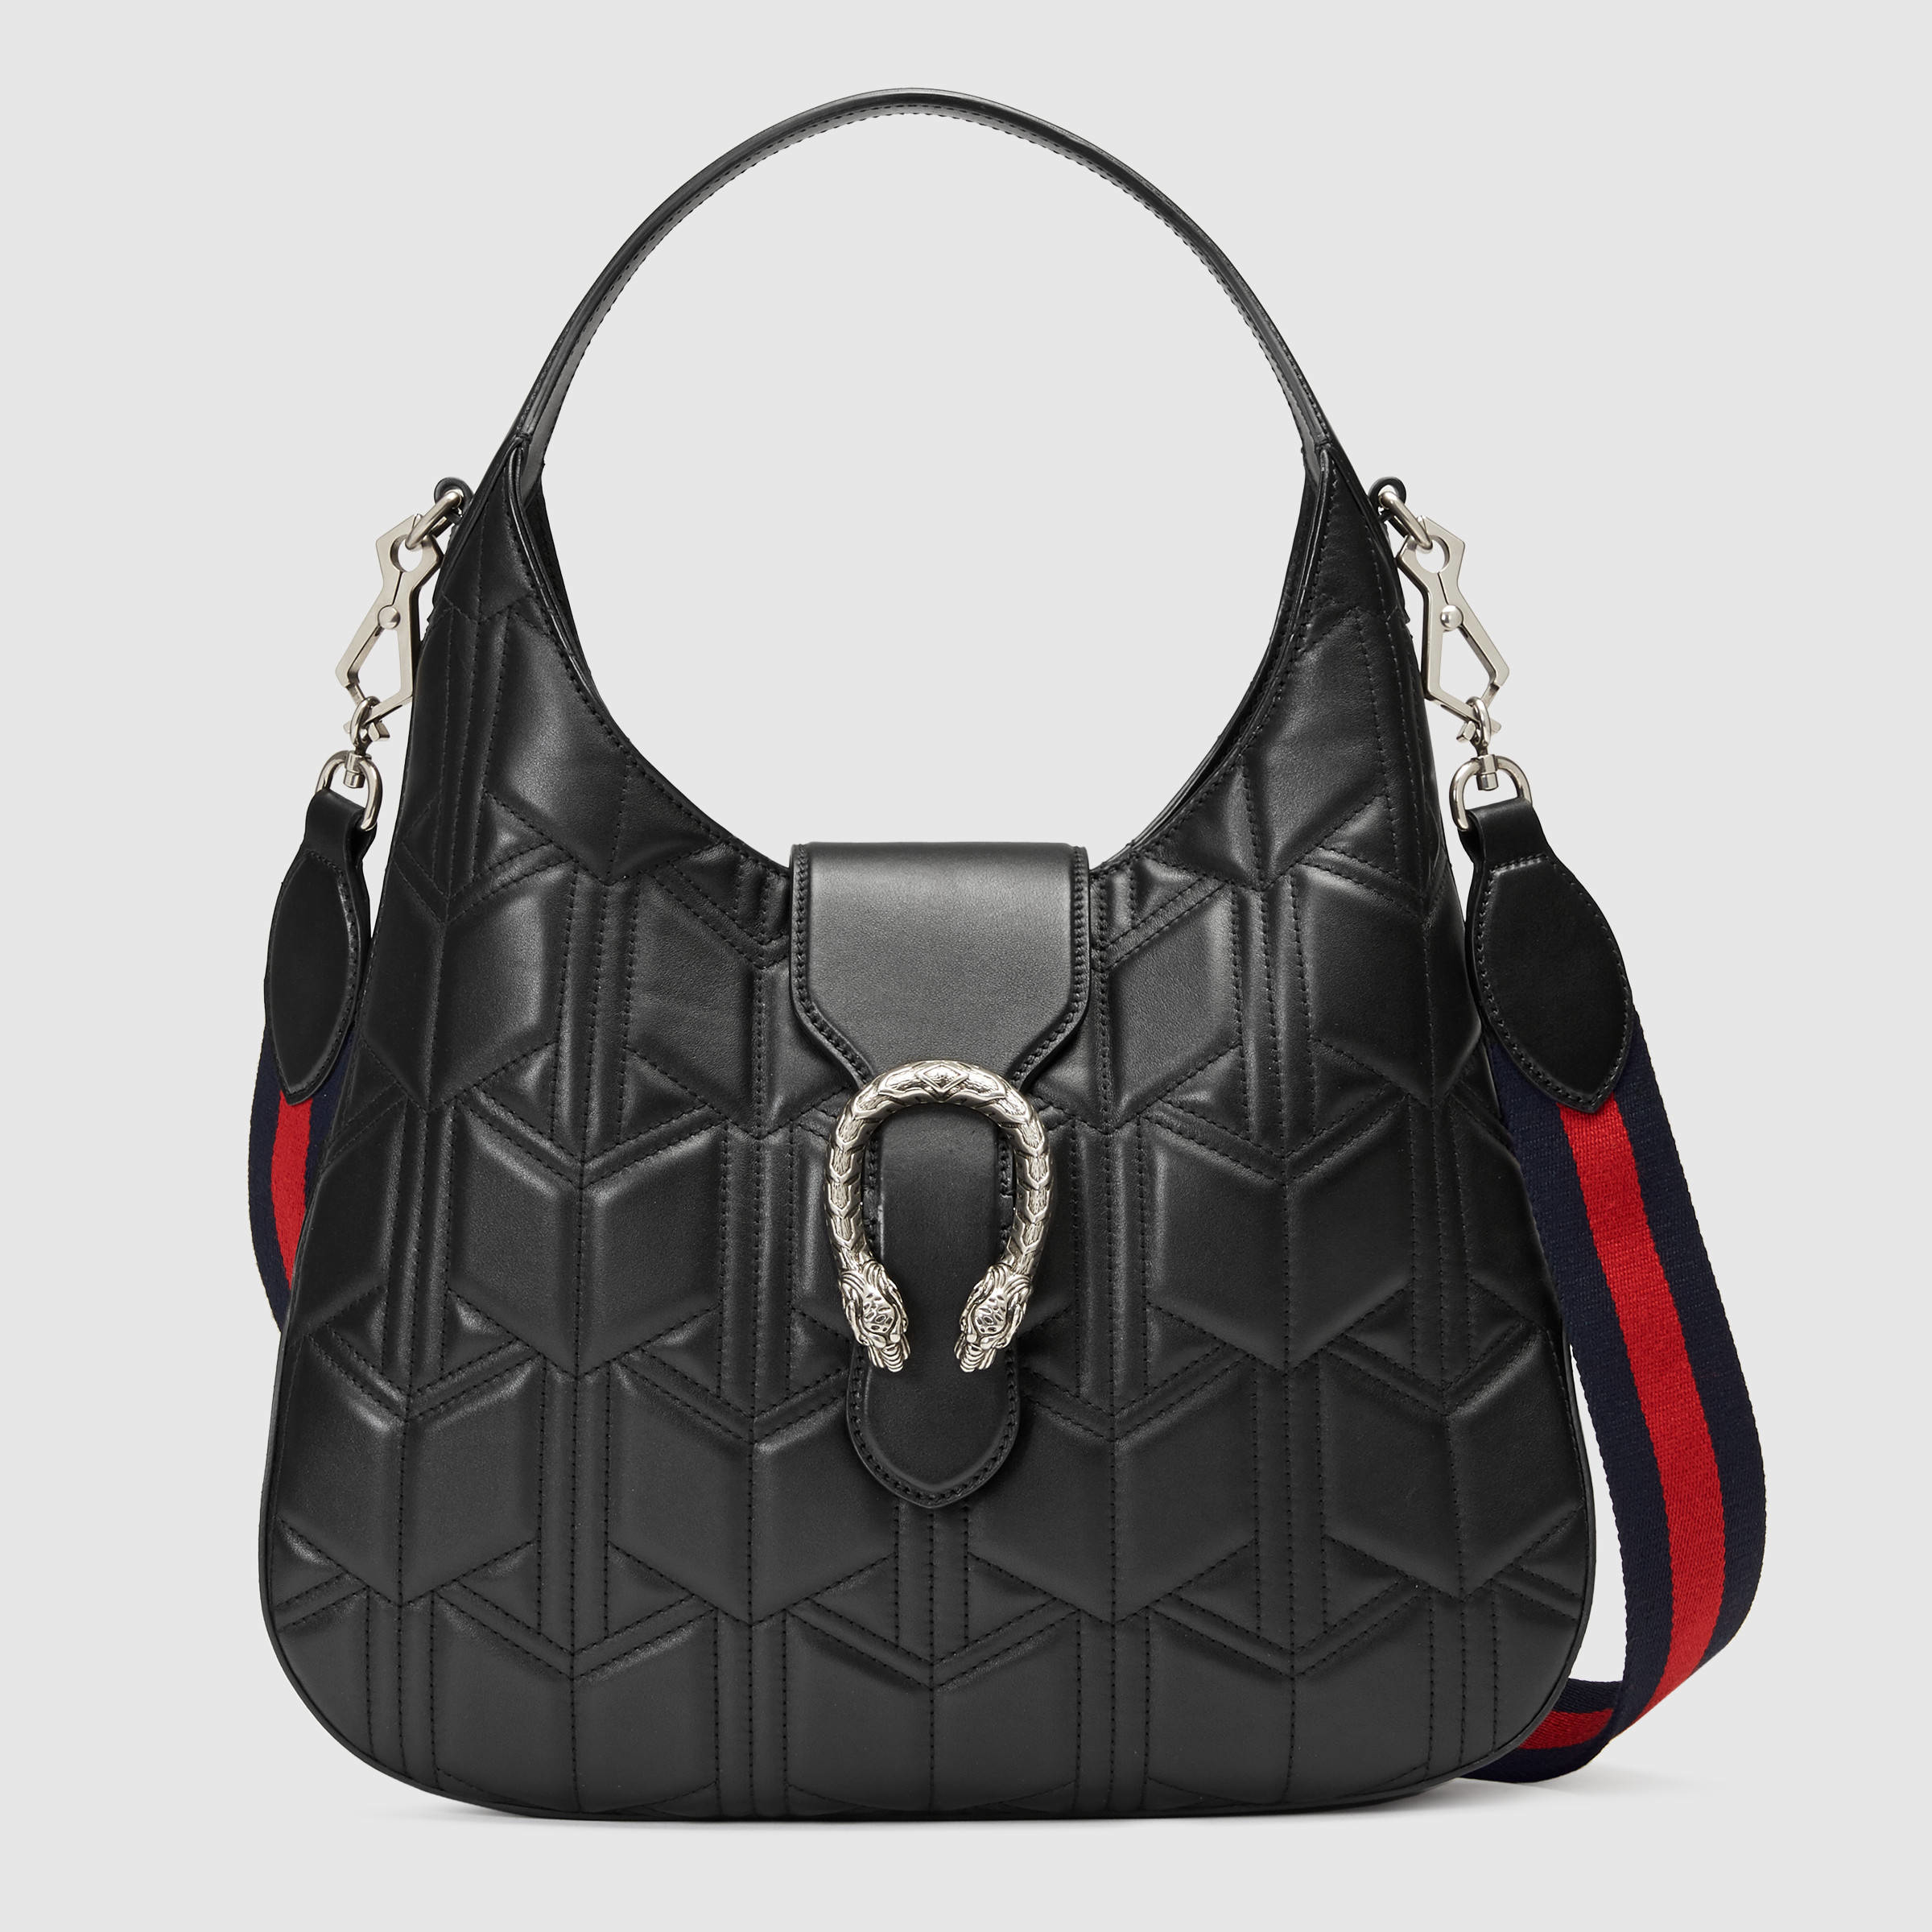 Gucci Dionysus Matelassé Leather Hobo Bag in Black | Lyst